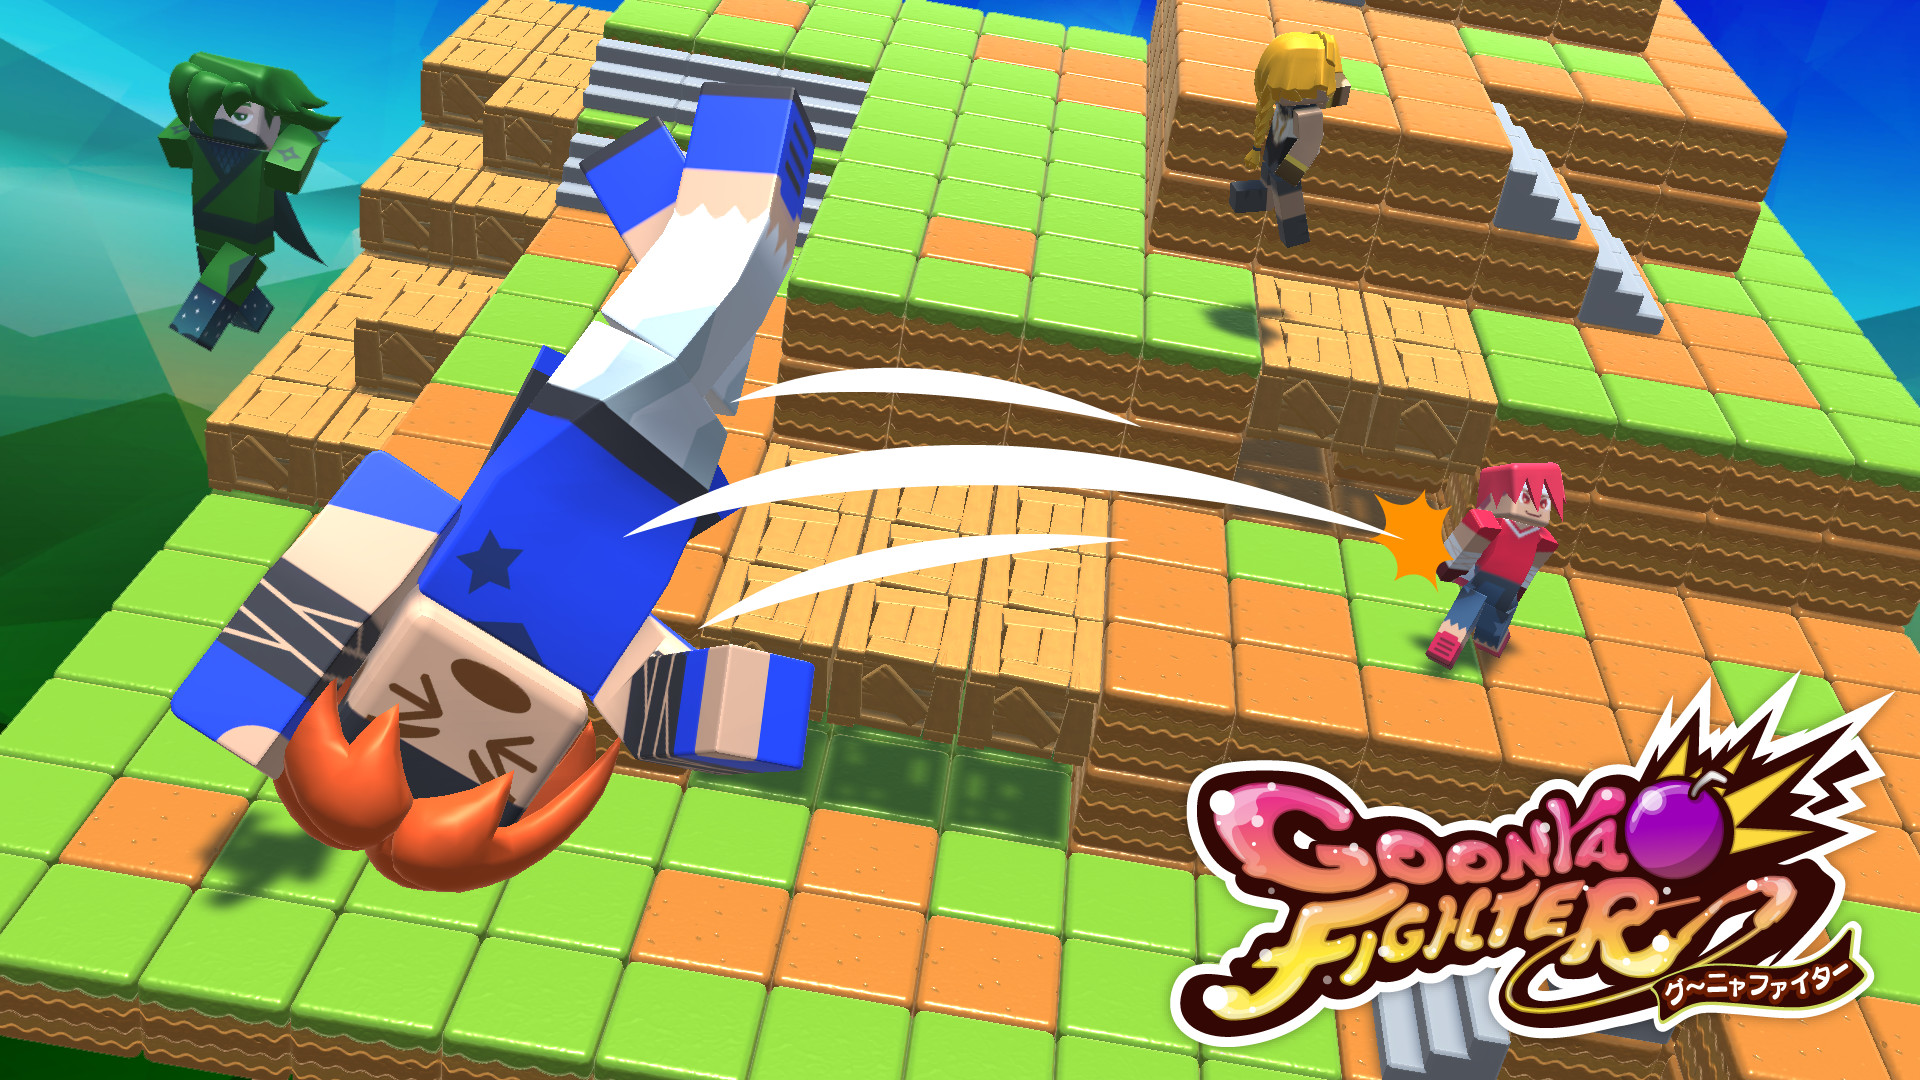 GoonyaFighter - New battle style: "Super Goonya Fighters!?" Featured Screenshot #1